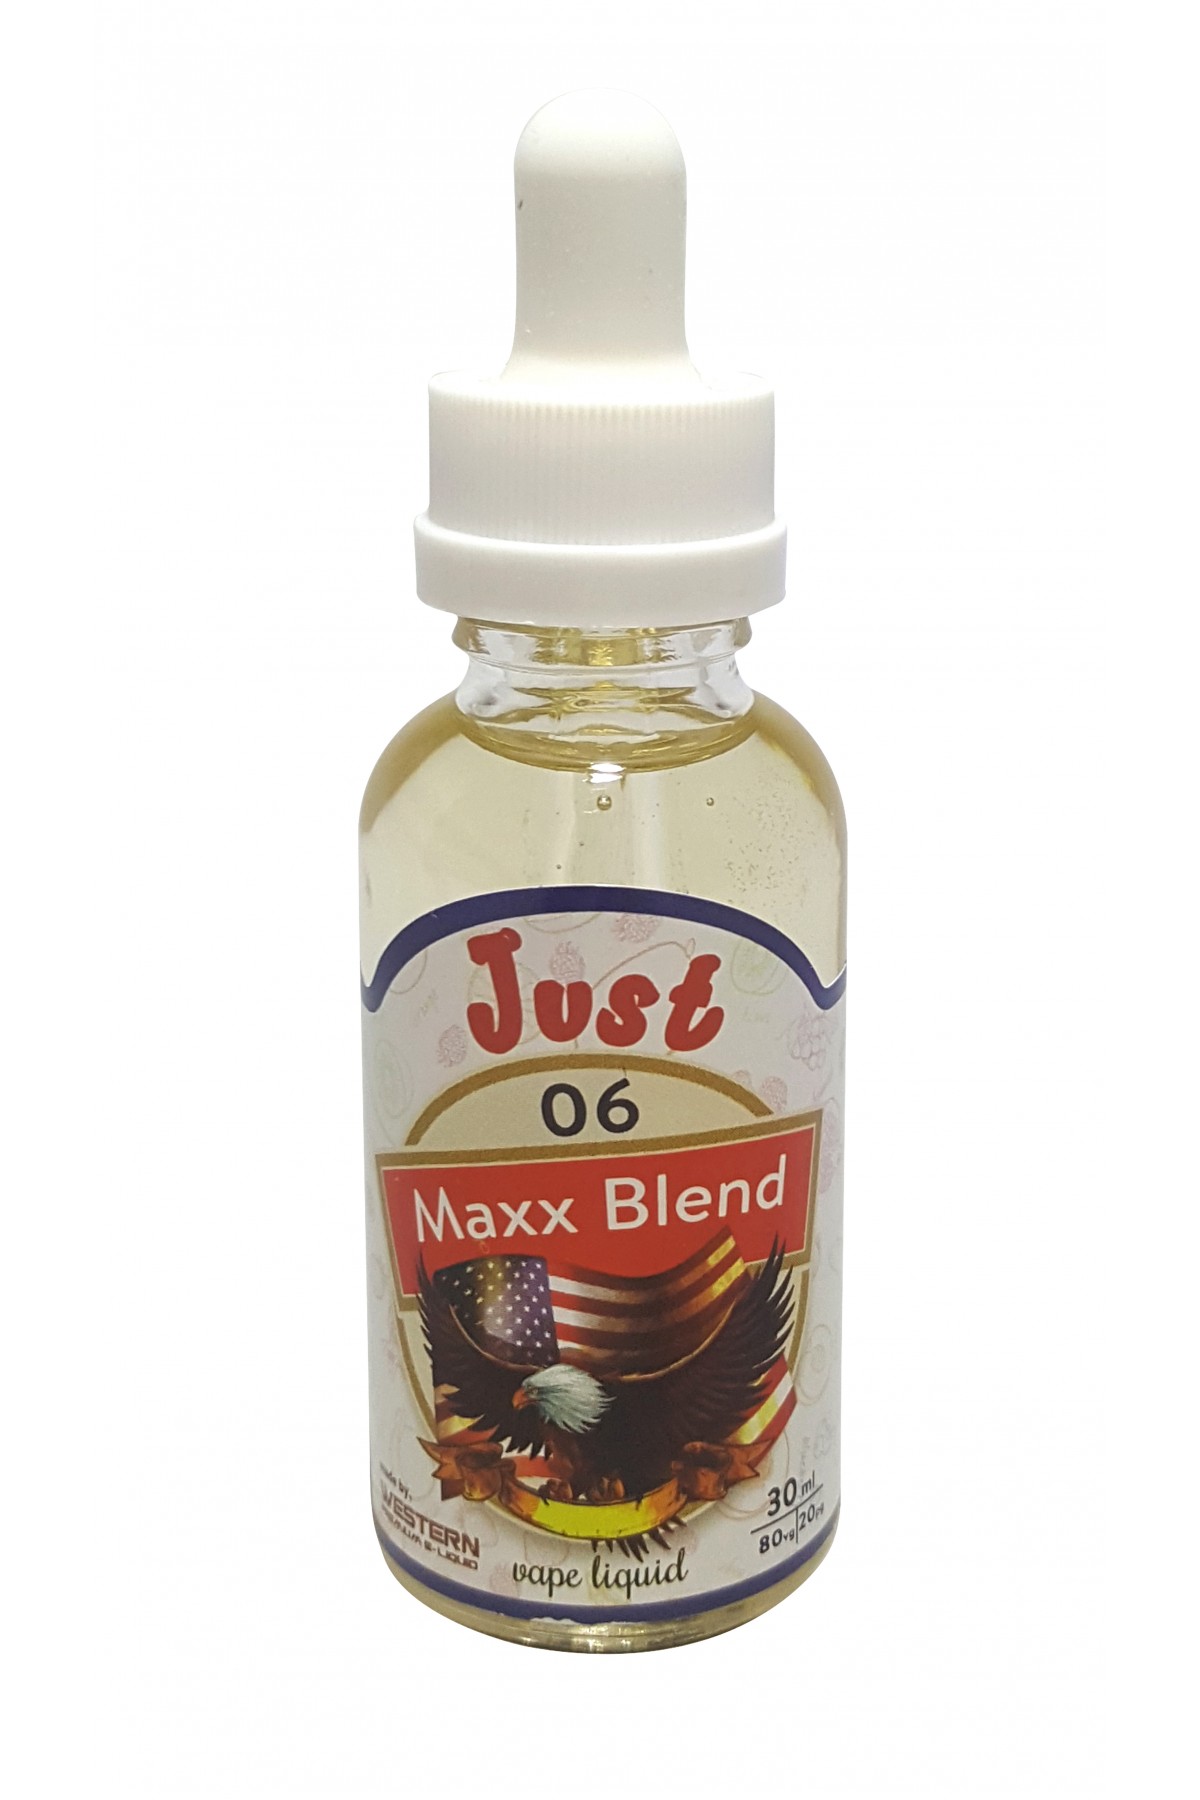 Just Premium - Maxxblend Elektronik Sigara Likiti (30 ml)